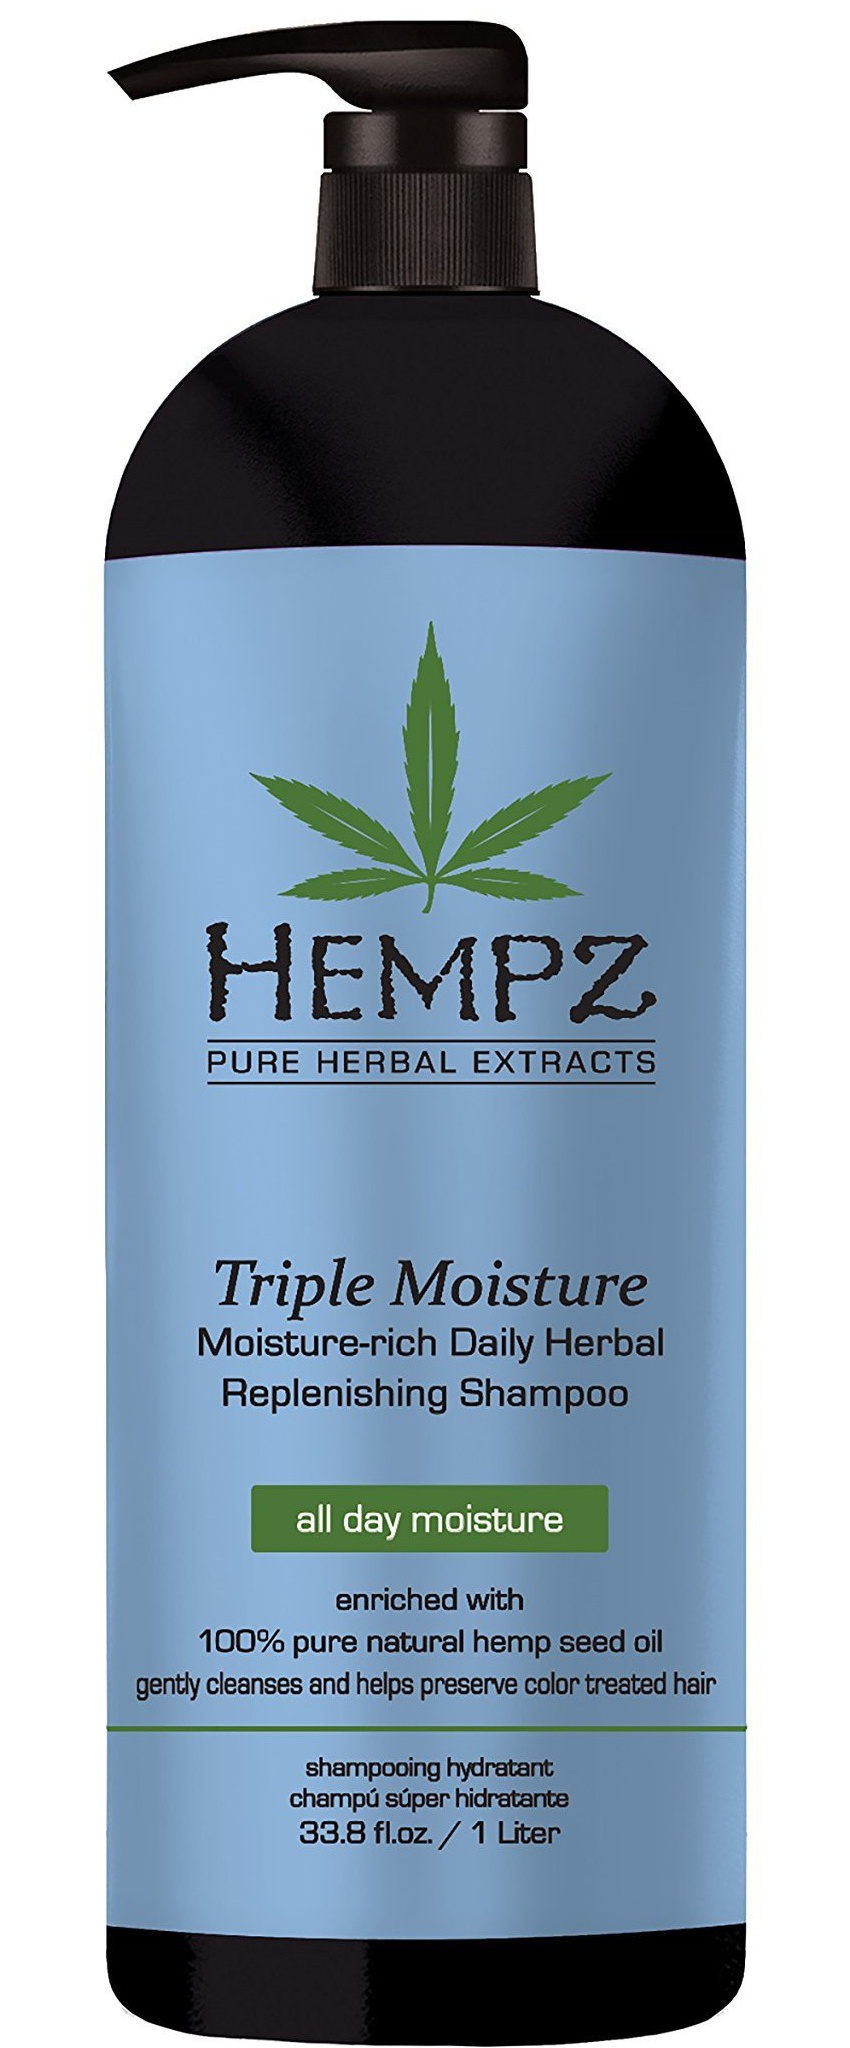 Hempz Triple Moisture-rich Daily Herbal Replenishing Shampoo